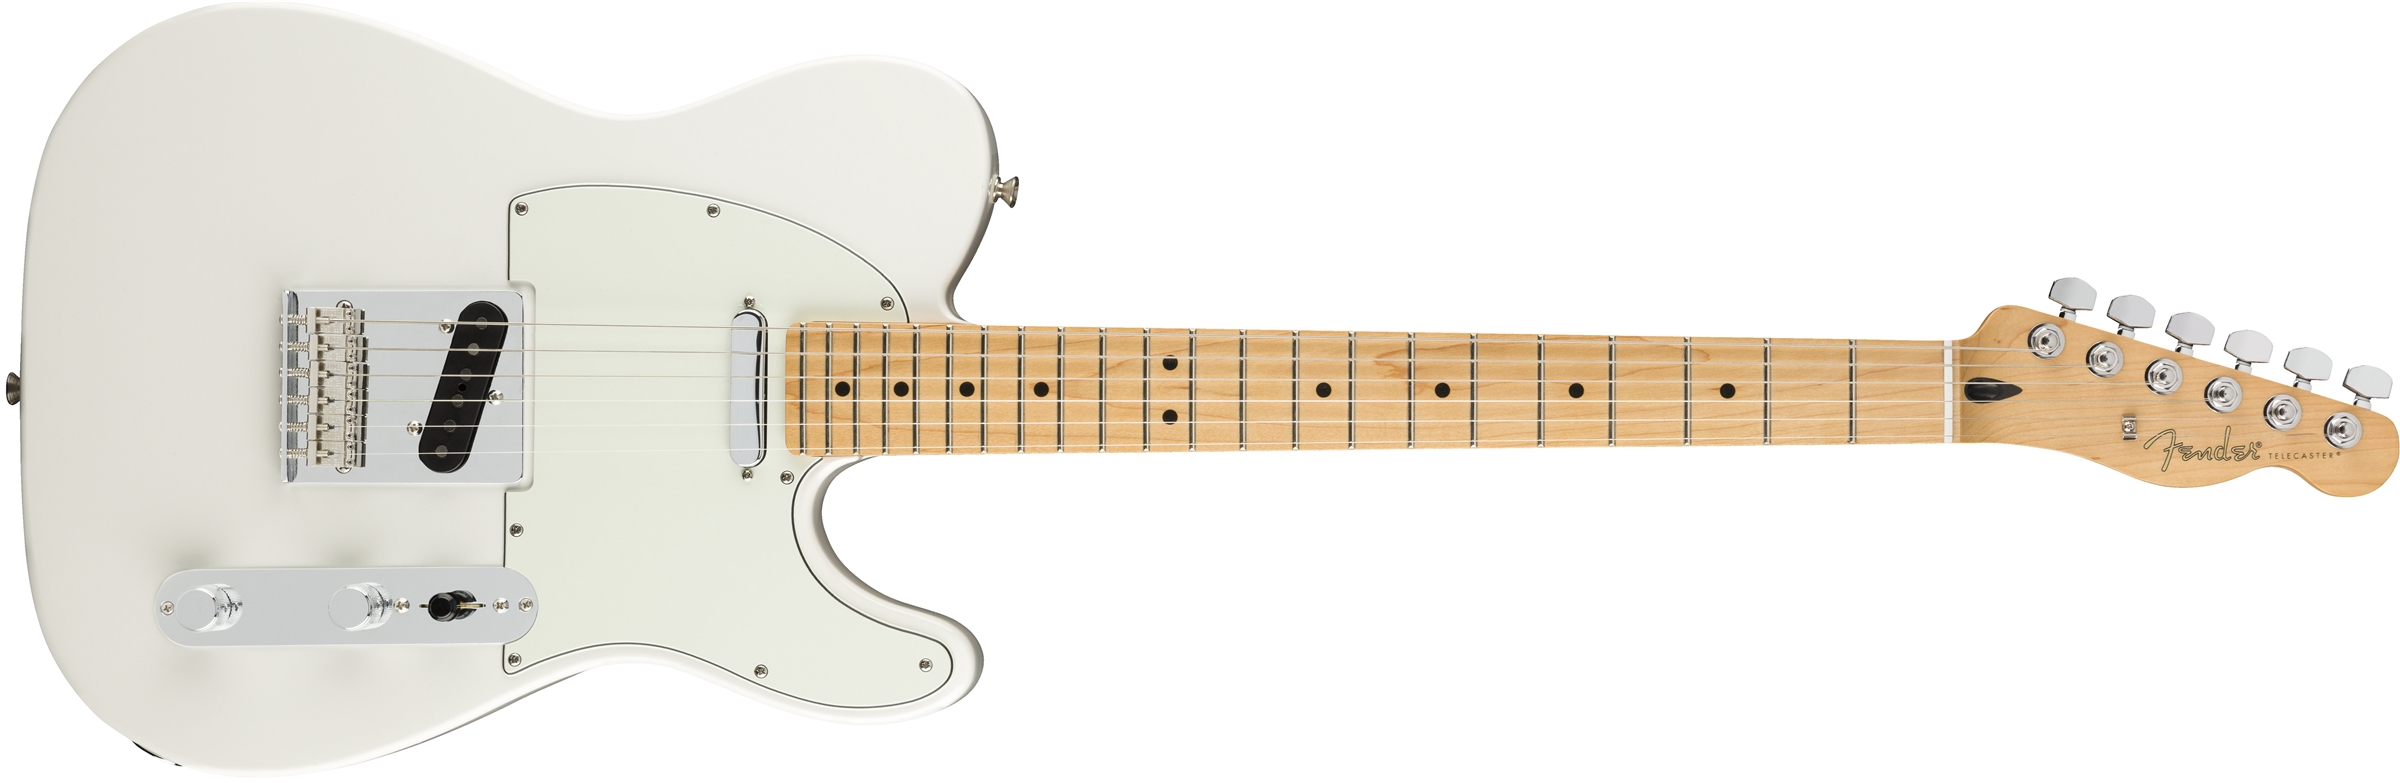 Fender Tele Player Mex Mn - Polar White - Tel shape electric guitar - Variation 1